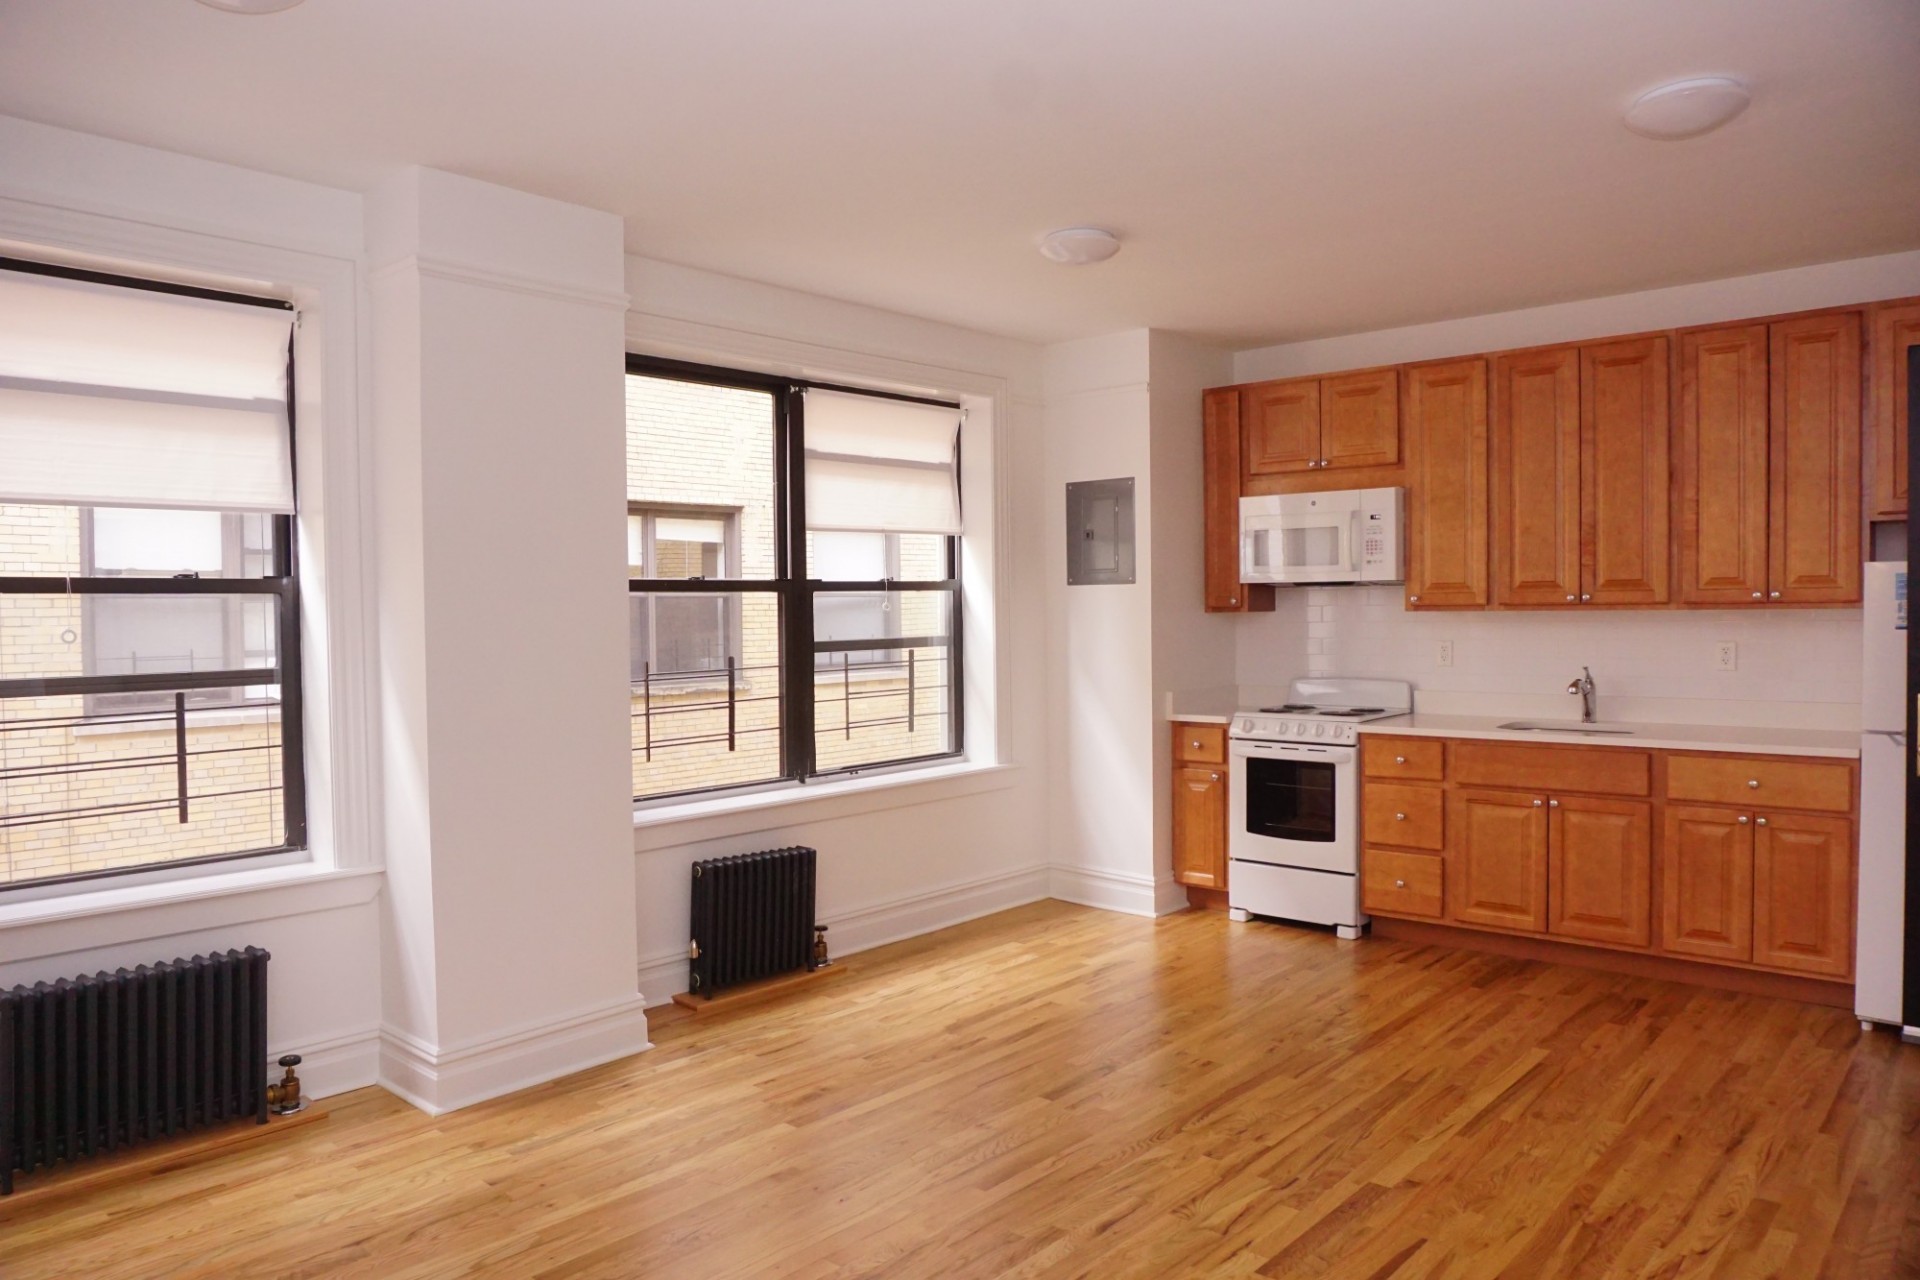 Example of studio apartment - kitchen view